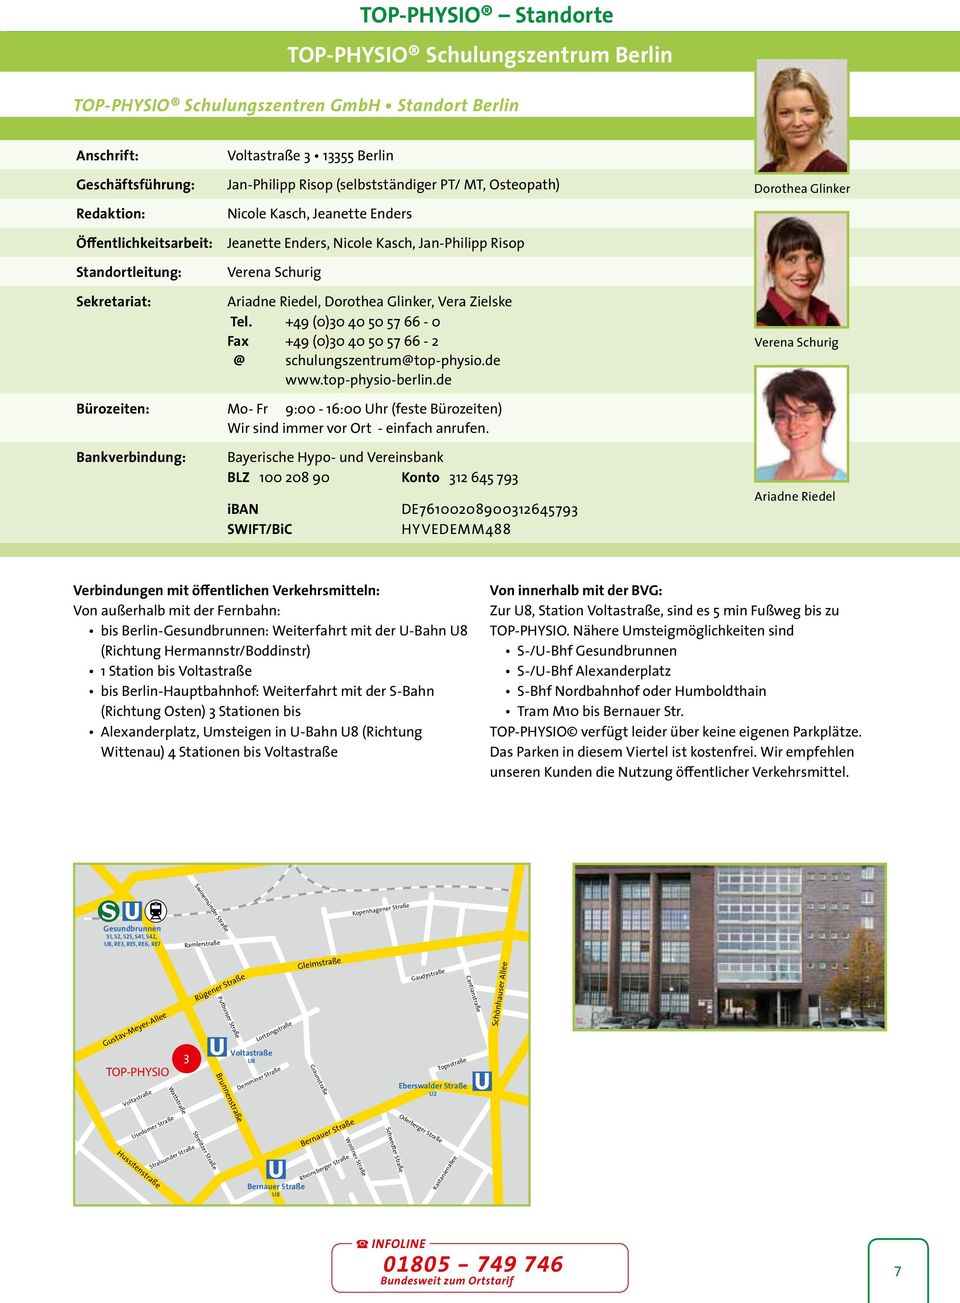 Glinker, Vera Zielske Tel. +49 (0)30 40 50 57 66-0 Fax +49 (0)30 40 50 57 66-2 @ schulungszentrum@top-physio.de www.top-physio-berlin.